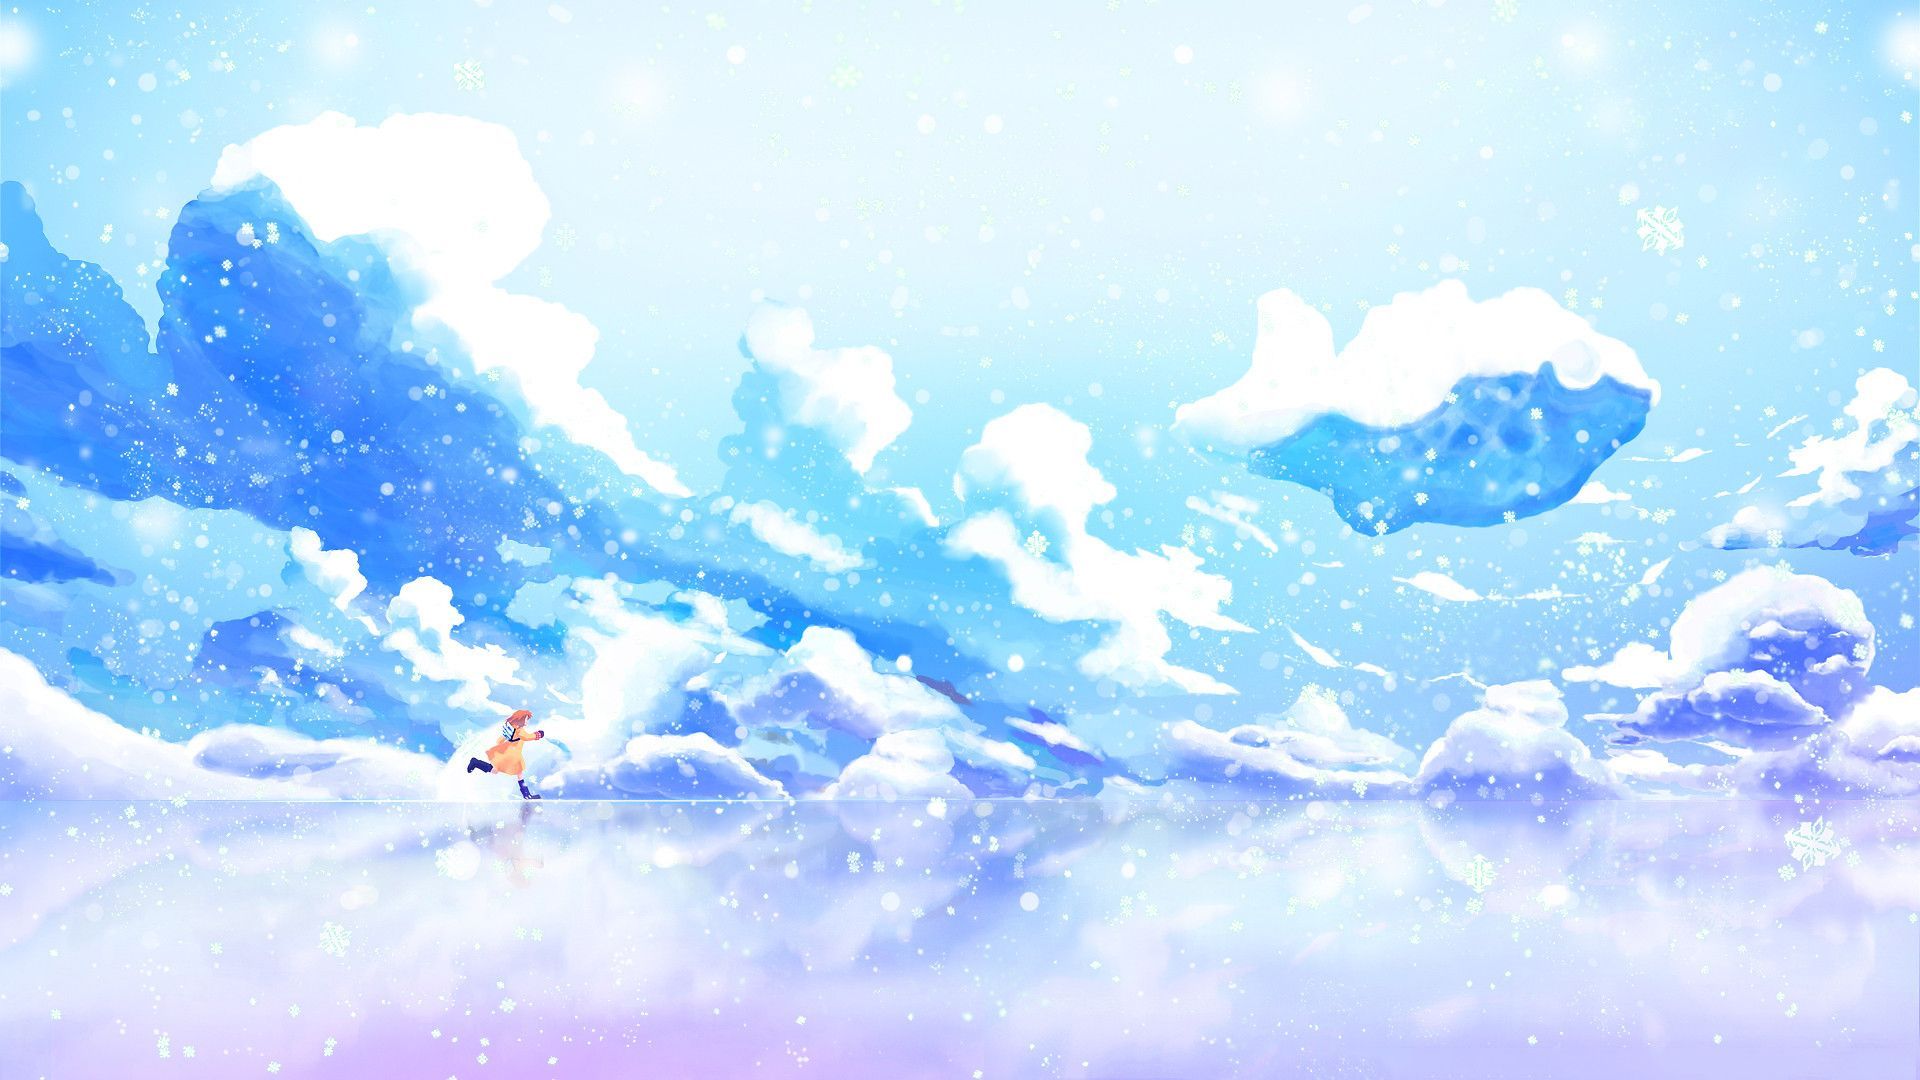 Anime Scenery Ice Free Wallpaper Desktop Wallpaper. Anime scenery wallpaper, Anime scenery, Scenery wallpaper